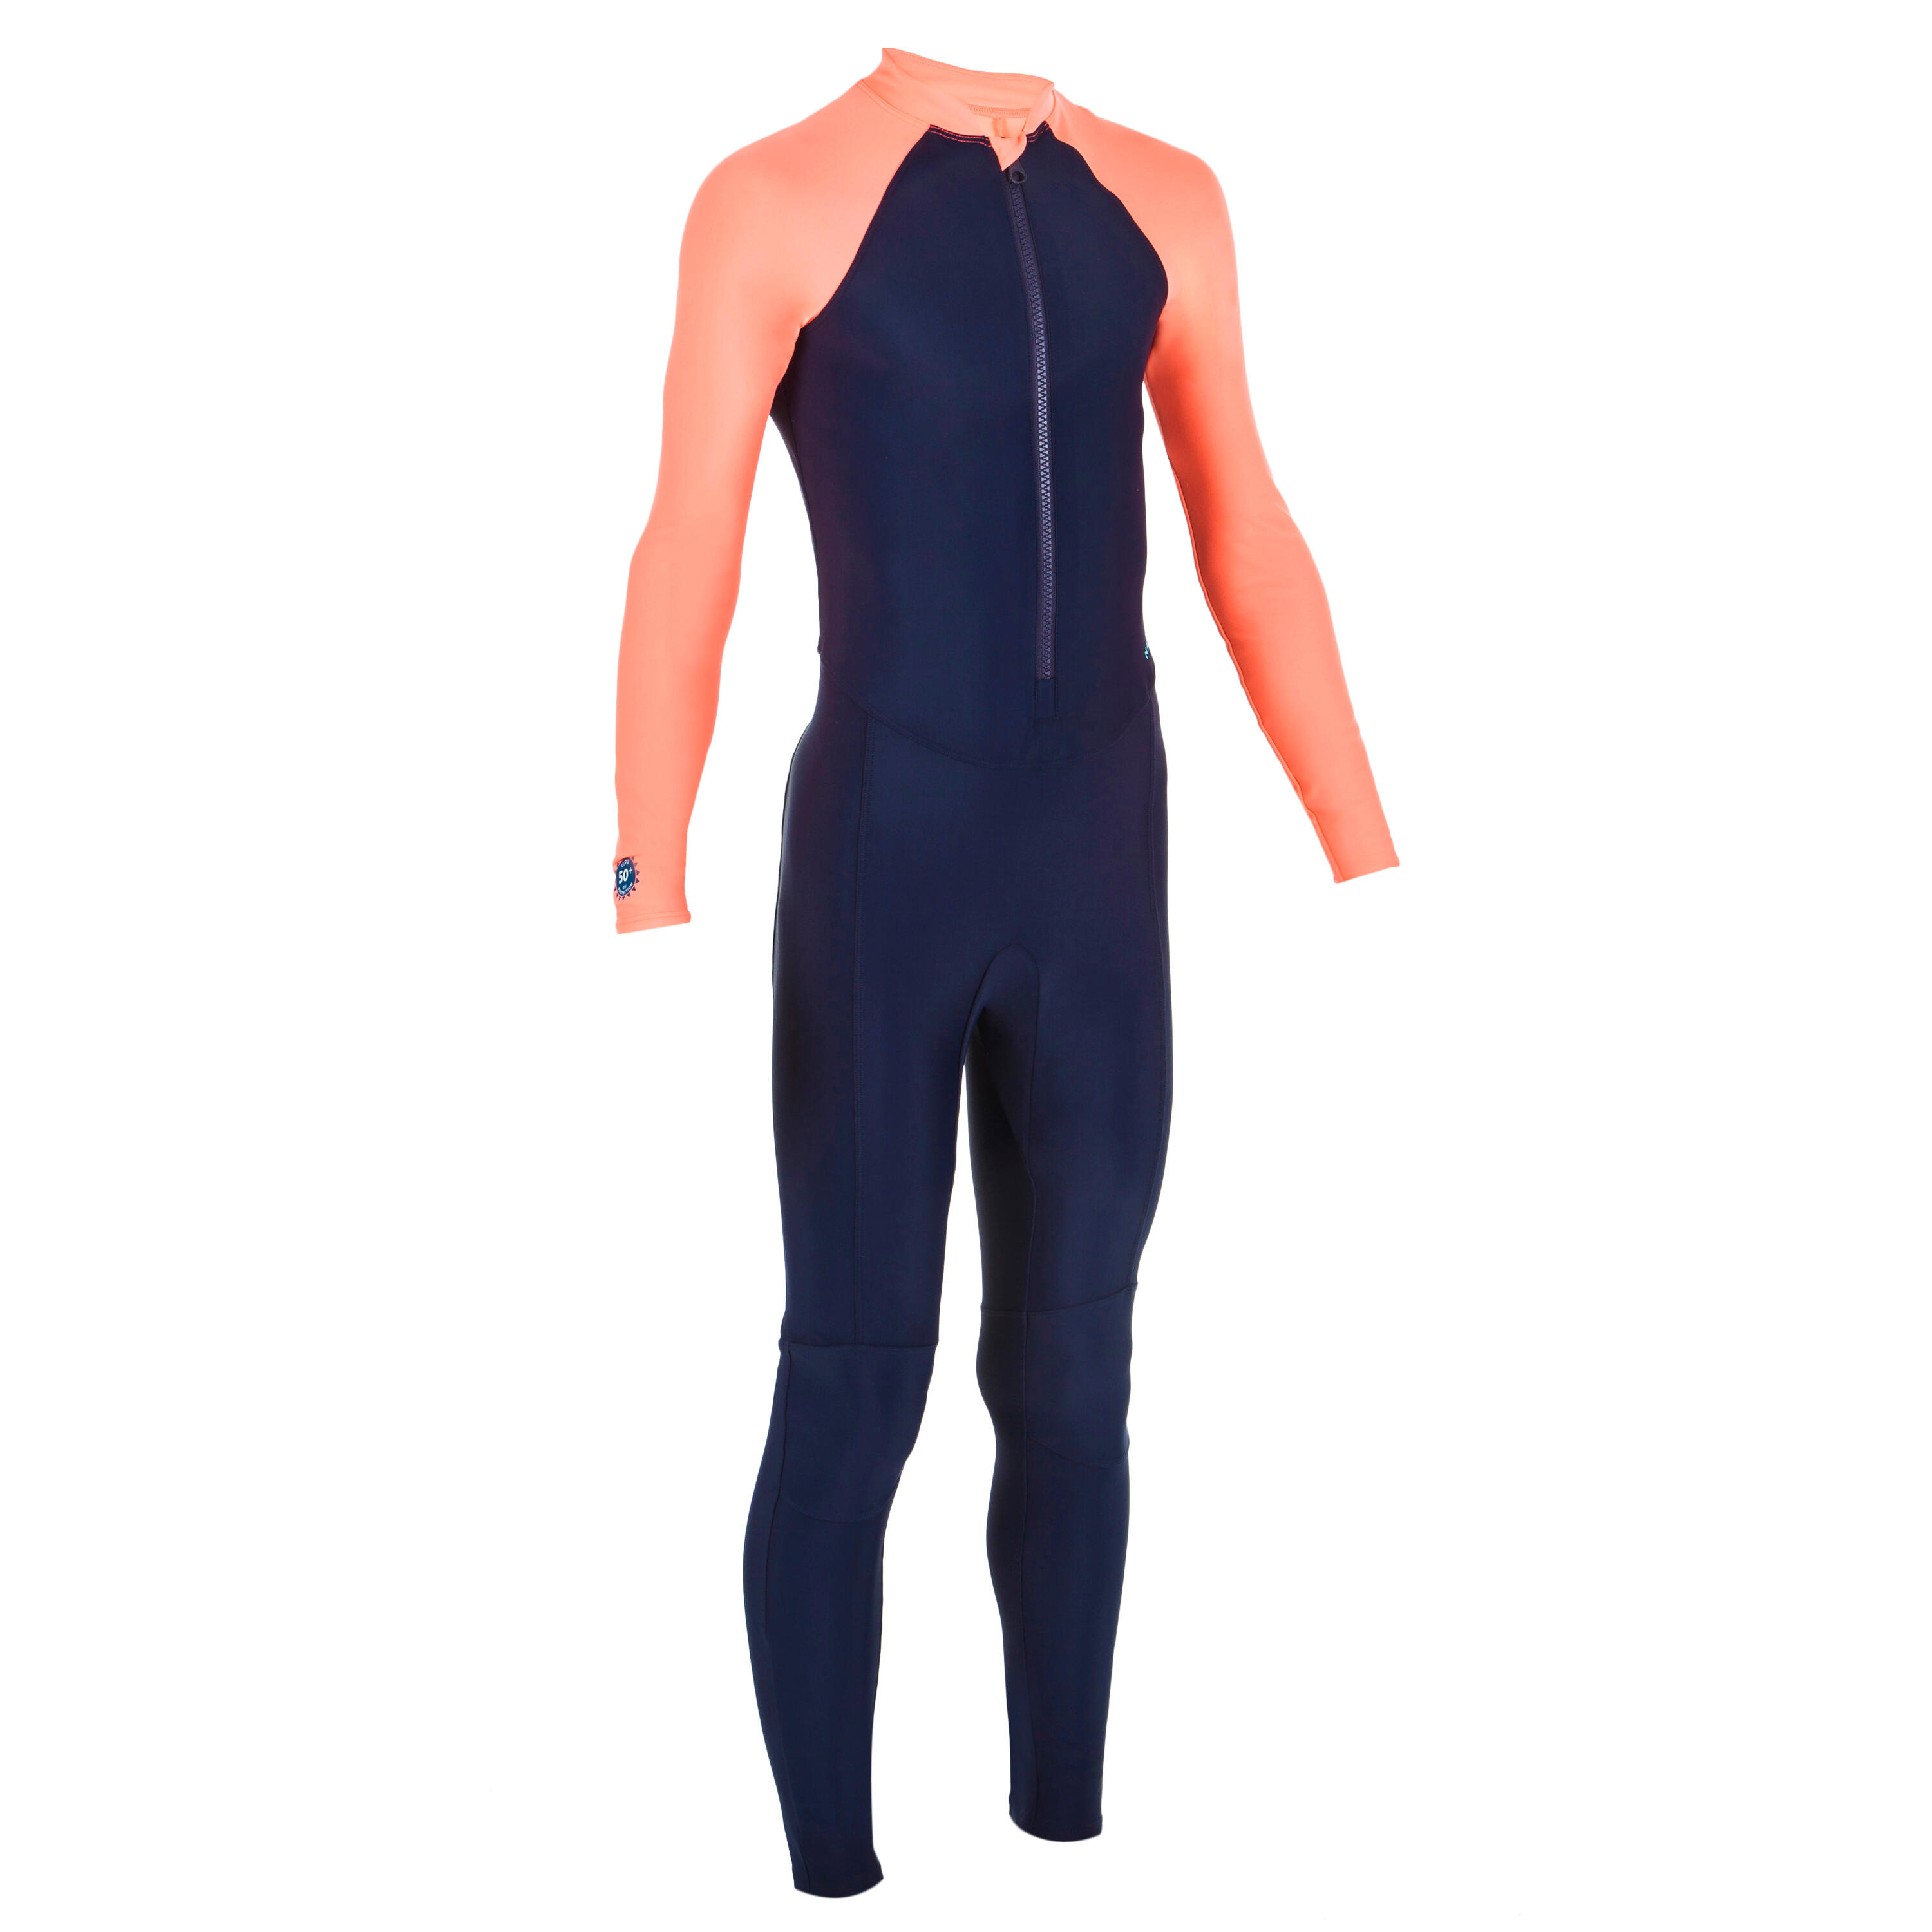 https://contents.mediadecathlon.com/p1830352/k$24497e0bb59e6a6779f0e6b1c3337761/girls-full-body-swimsuit-100-blue-coral-nabaiji-8580879.jpg